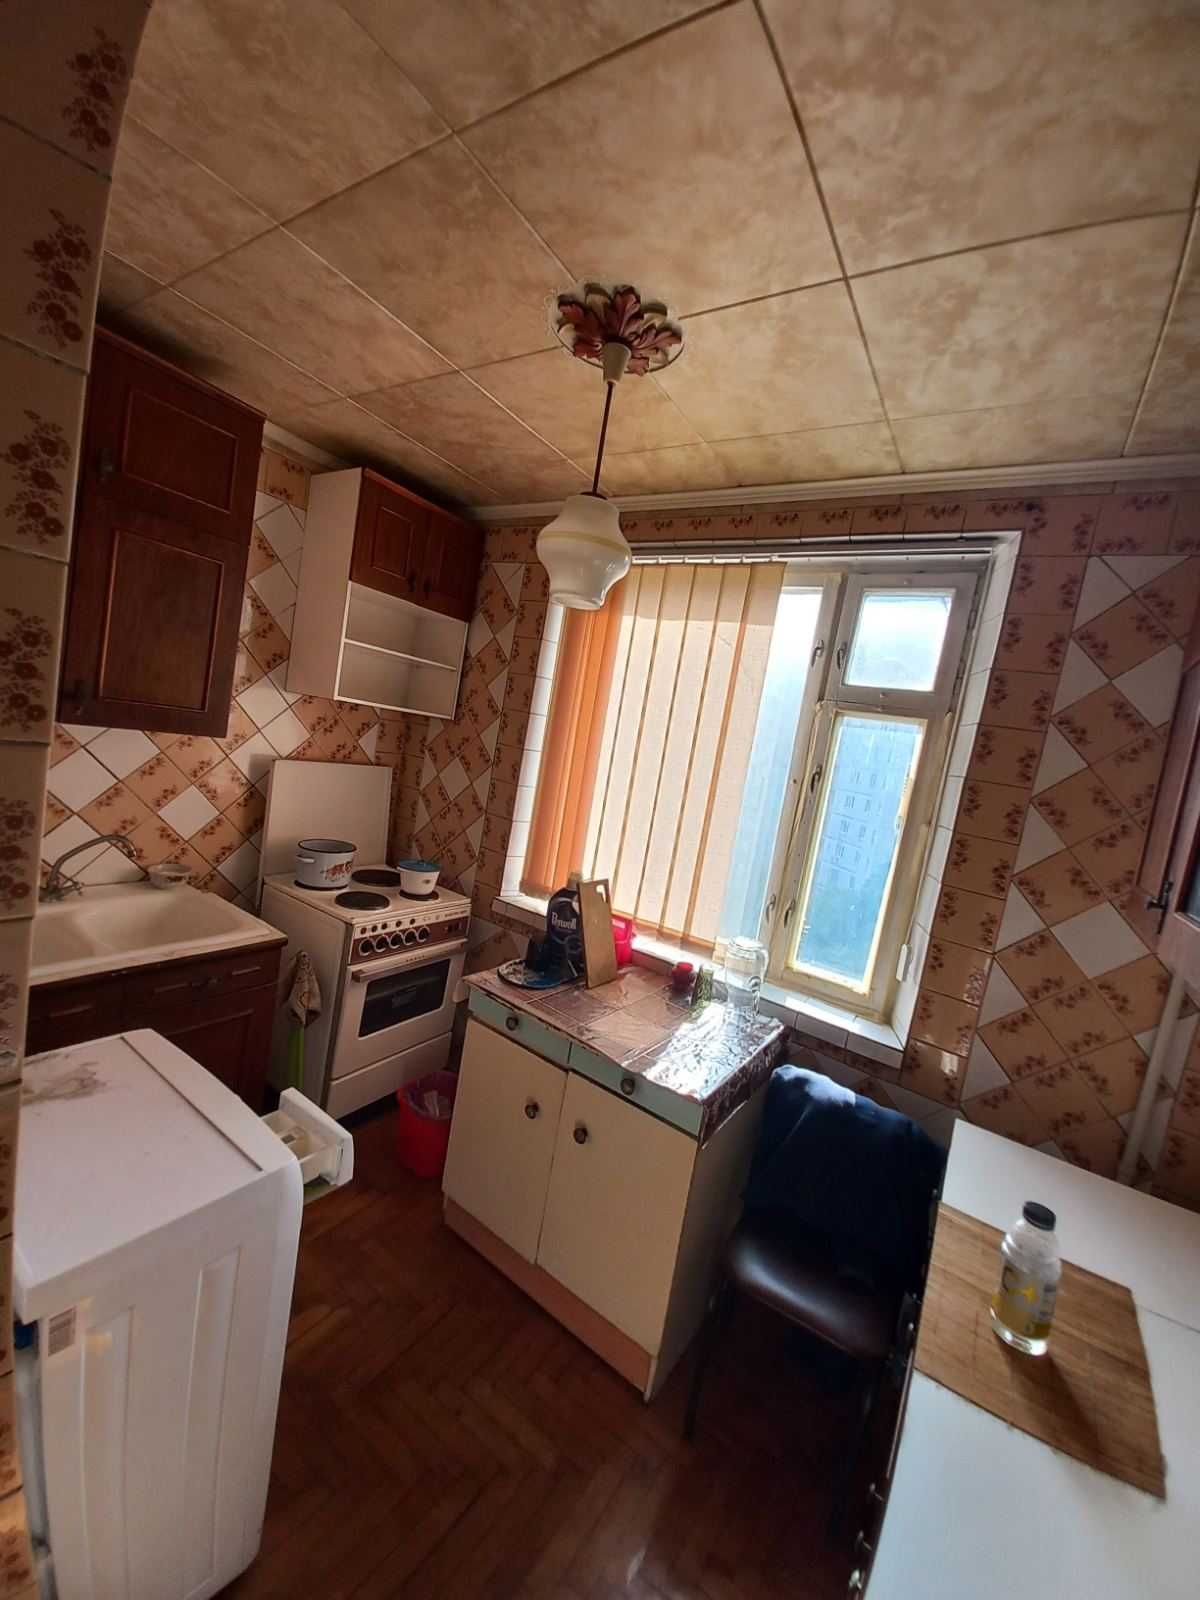 Продам 2х комнатную квартиру на Алекаеевке. По супер цене.